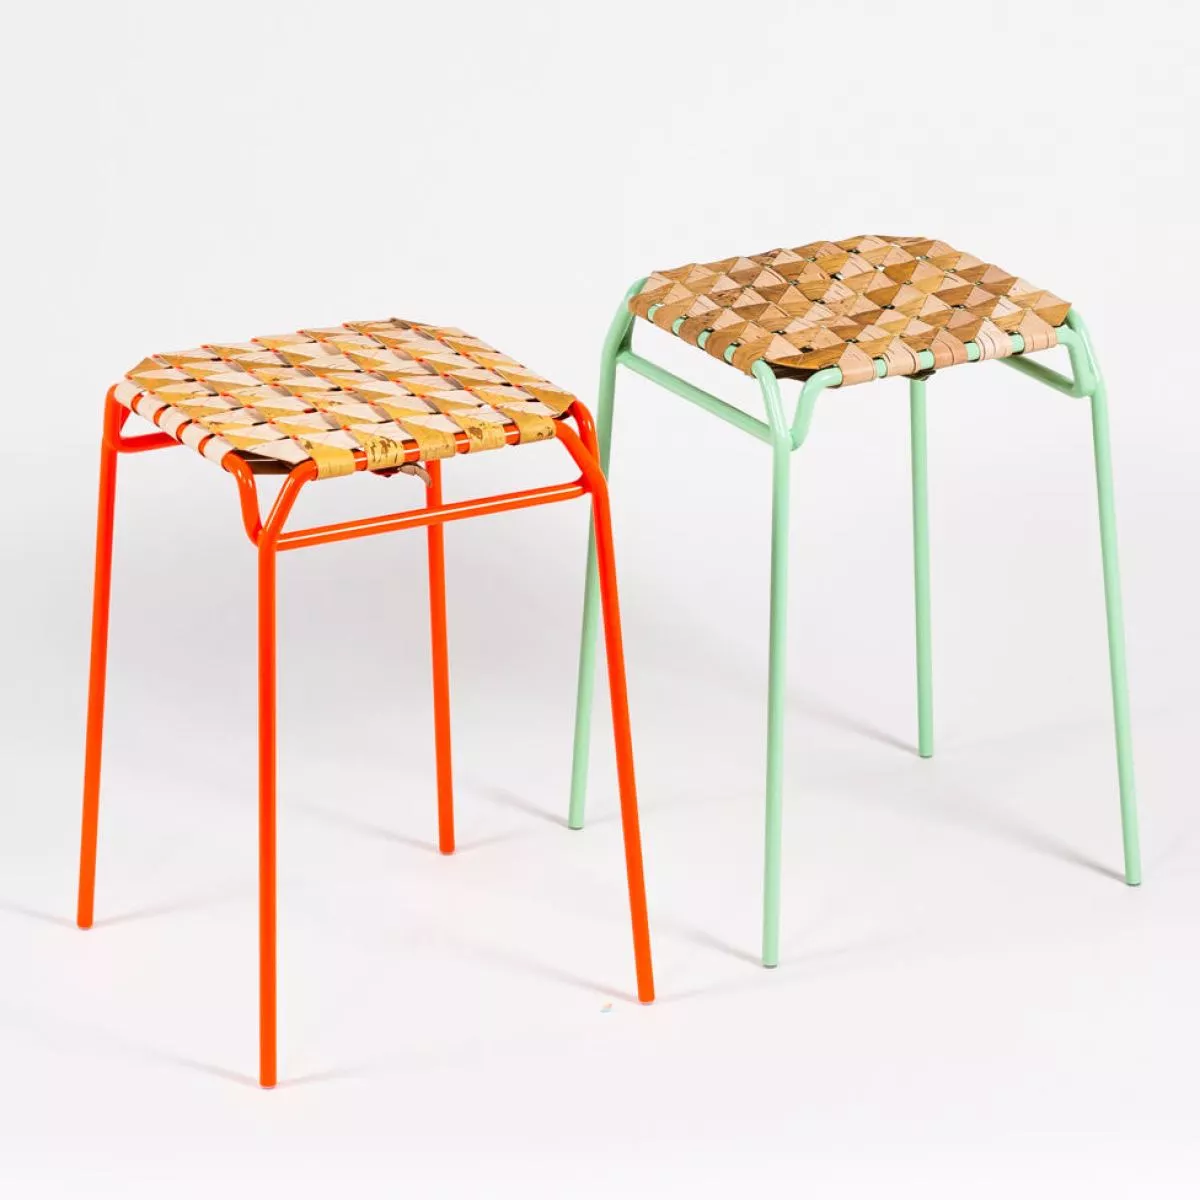 Design Stool with Artfully Folded Tree Bark Seat